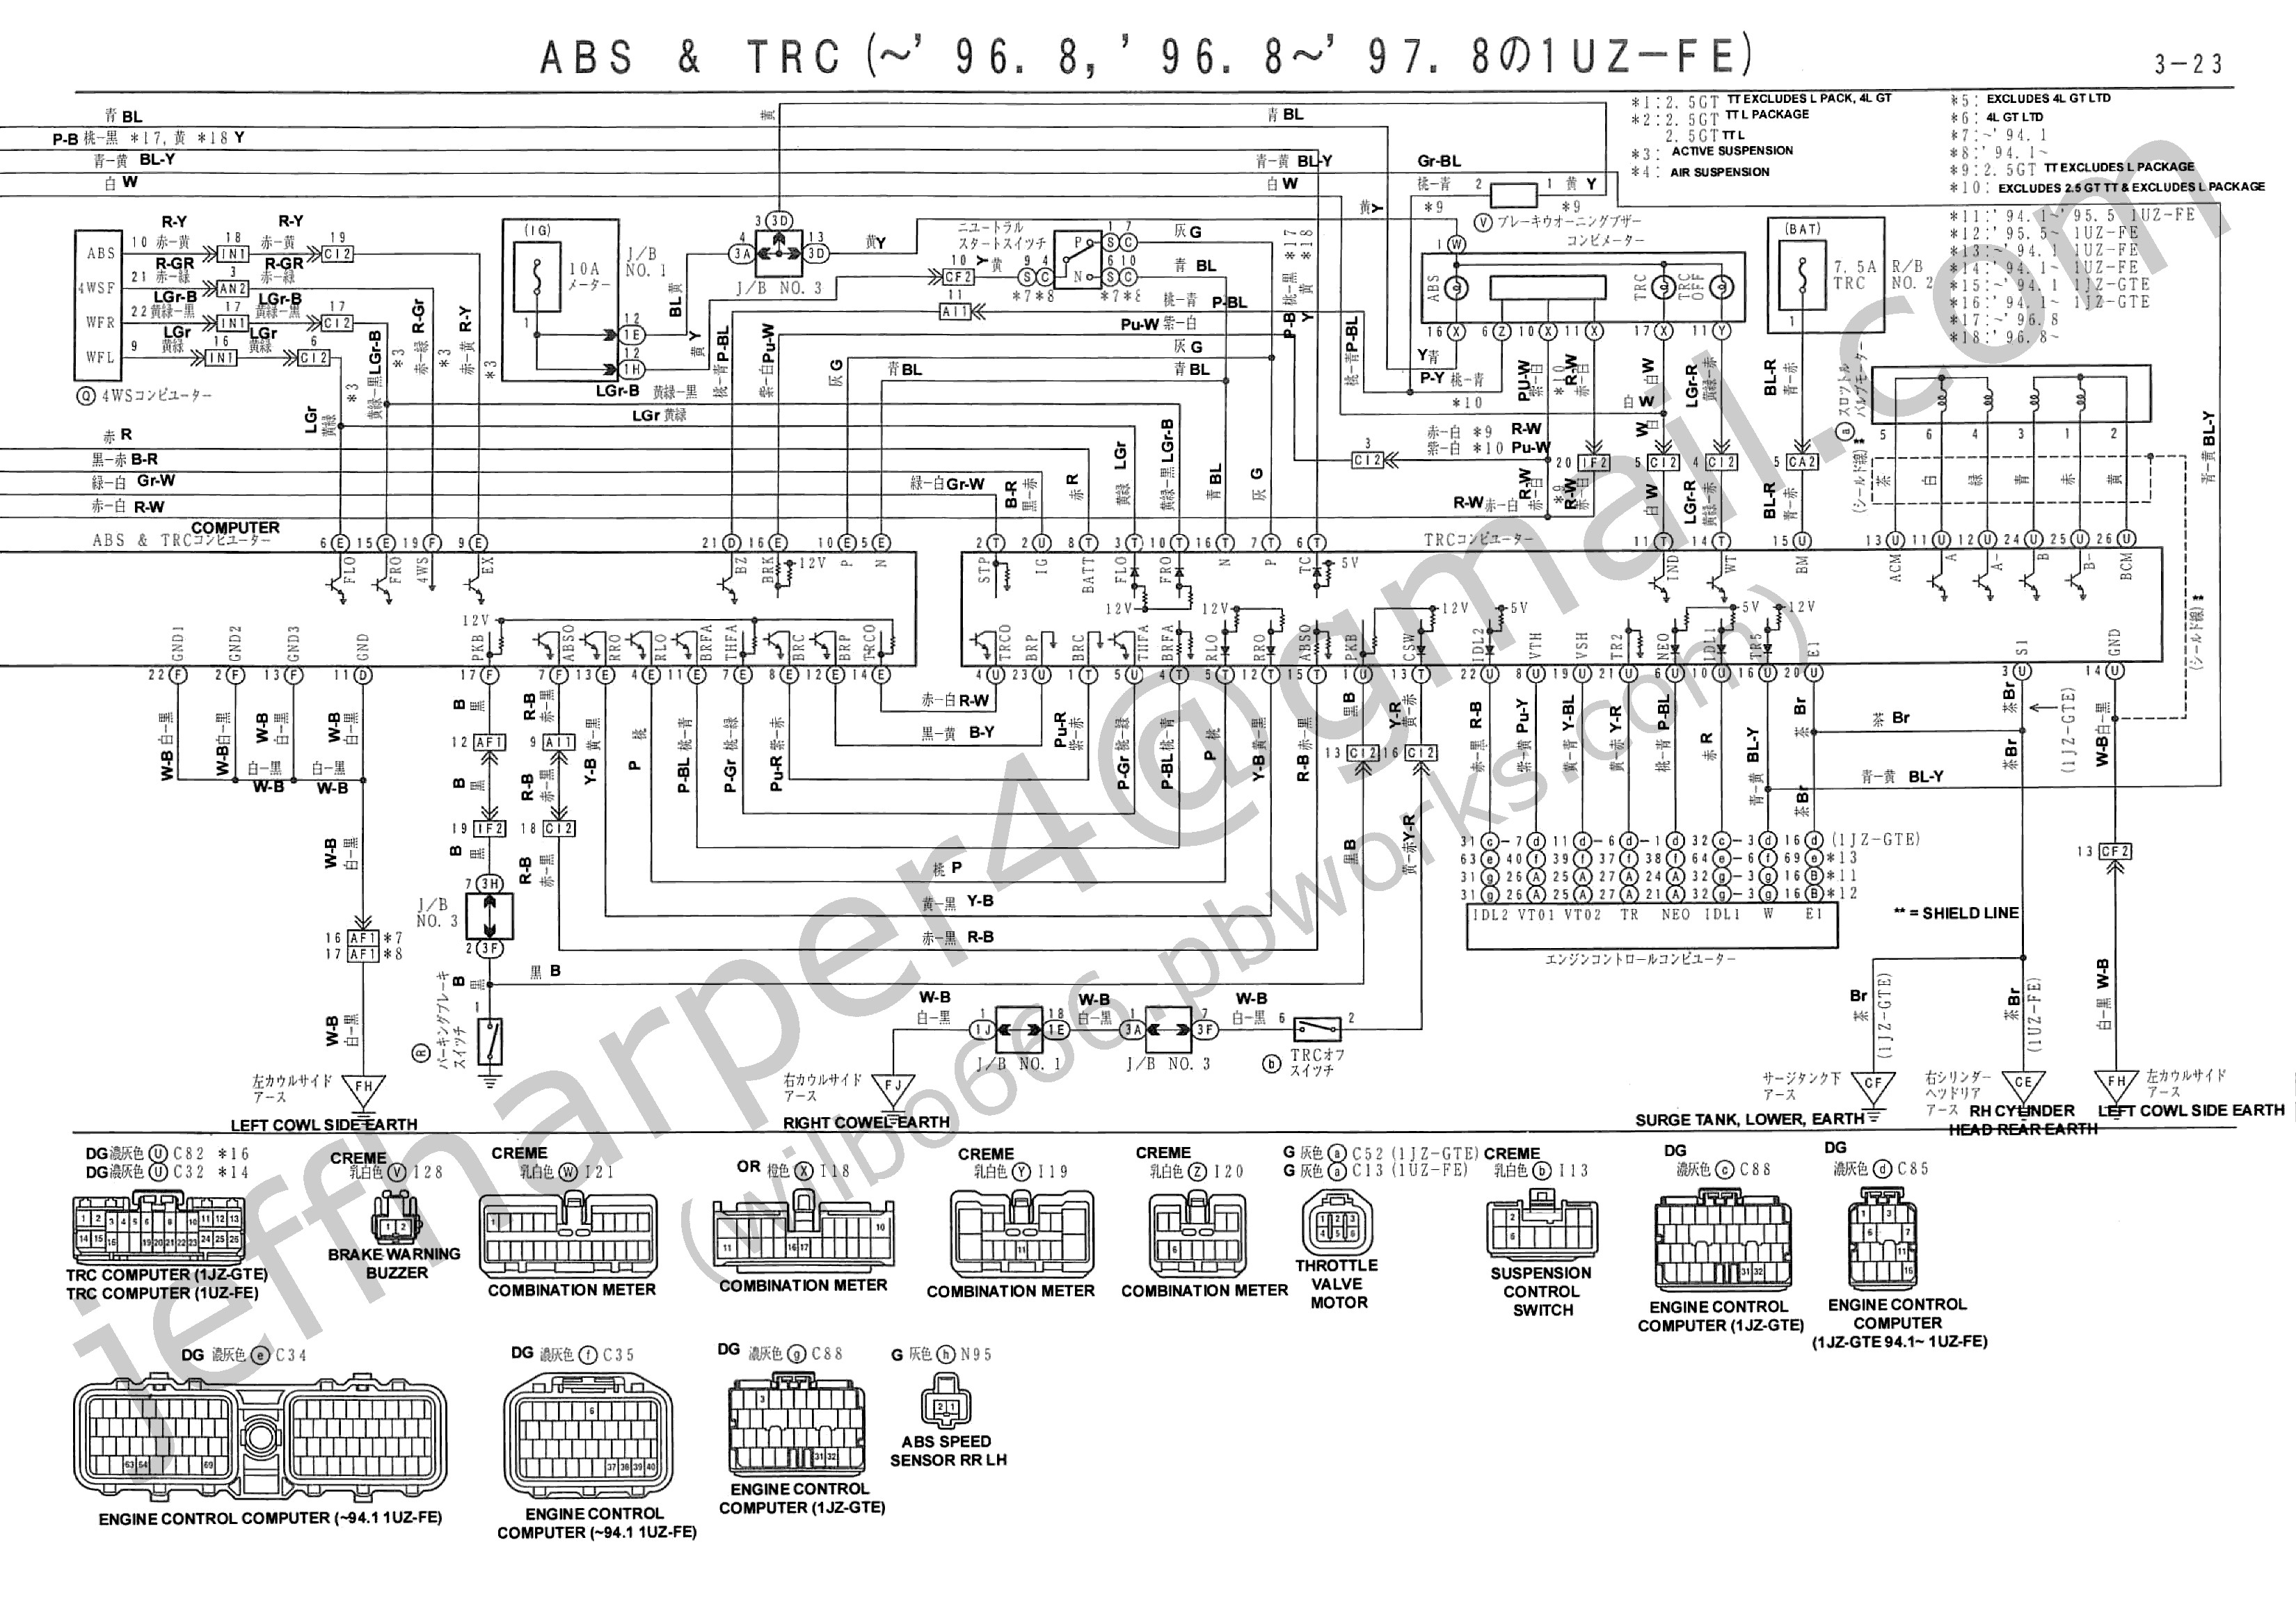 Chevy Cavalier Engine Diagram Wiring Diagram 1994 Lexus Ls400 Alternator Wiring Diagram Of Chevy Cavalier Engine Diagram